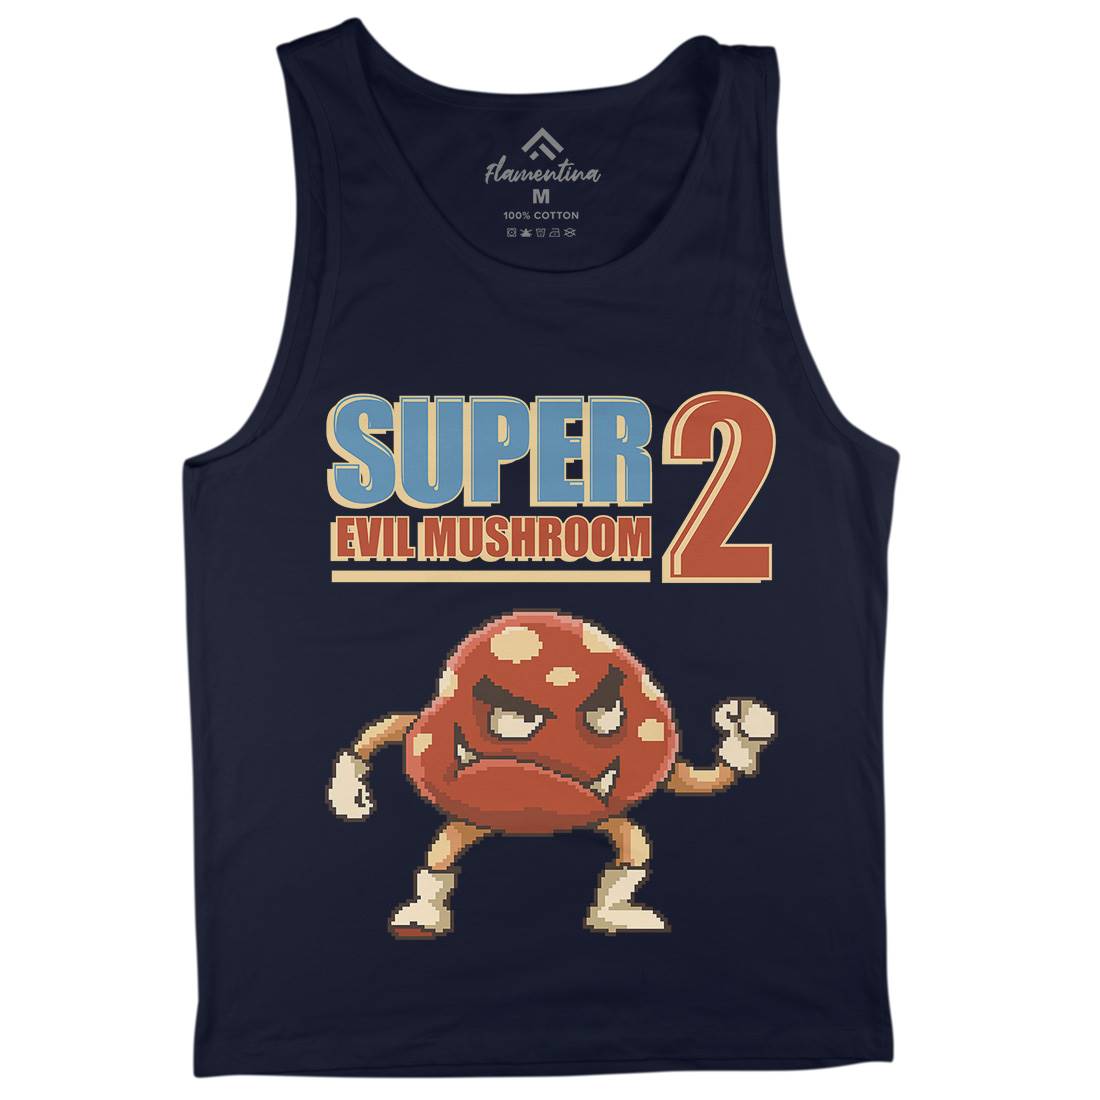 Super Evil Mushroom Mens Tank Top Vest Geek B962